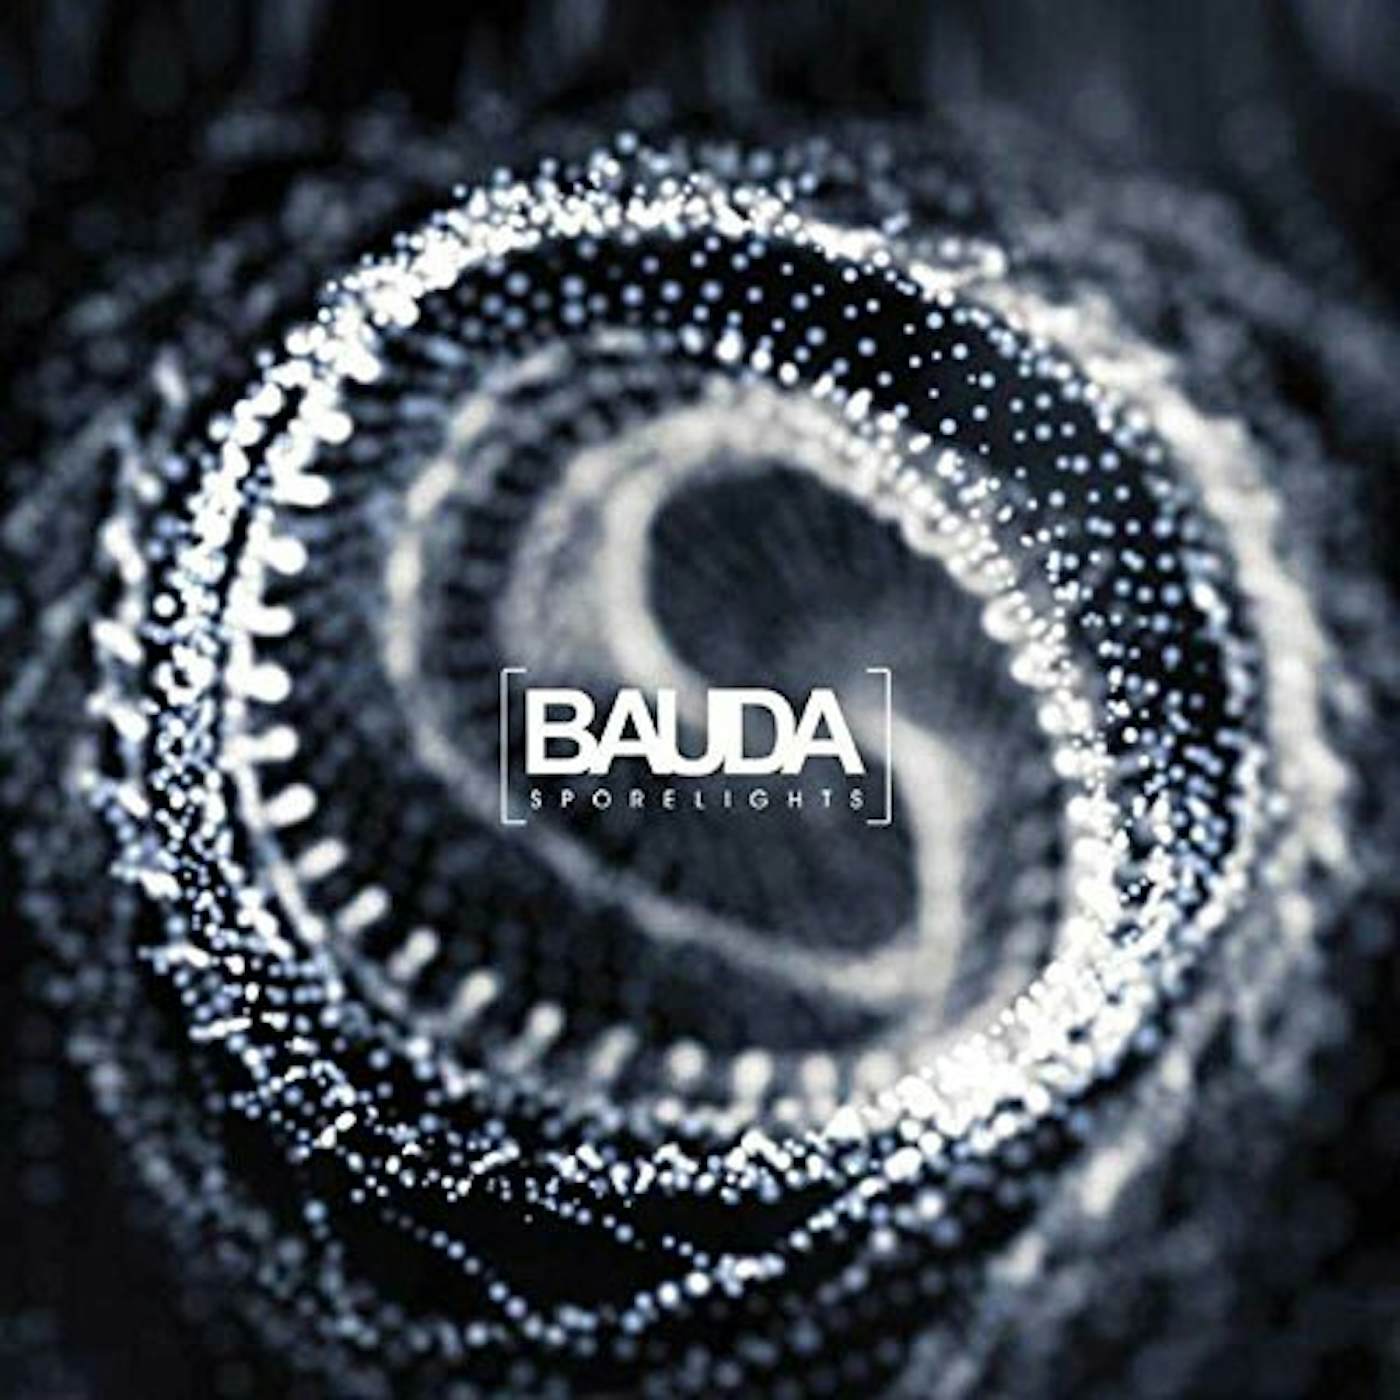 Bauda SPORELIGHTS CD